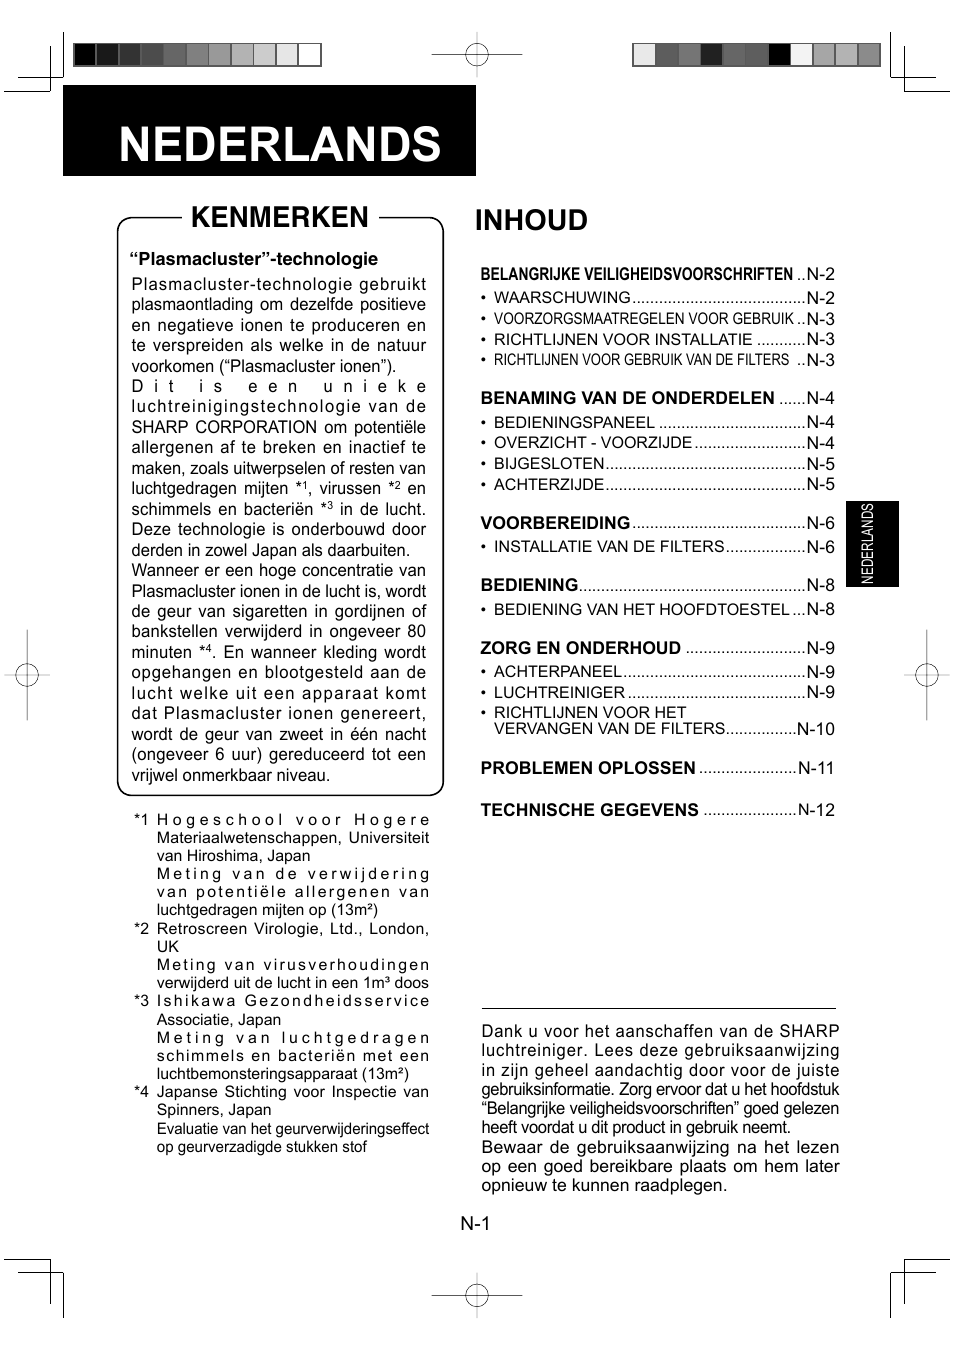 Nederlands, Kenmerken, Inhoud | Inhoud kenmerken | Sharp FU-Y30EU User Manual | Page 45 / 113